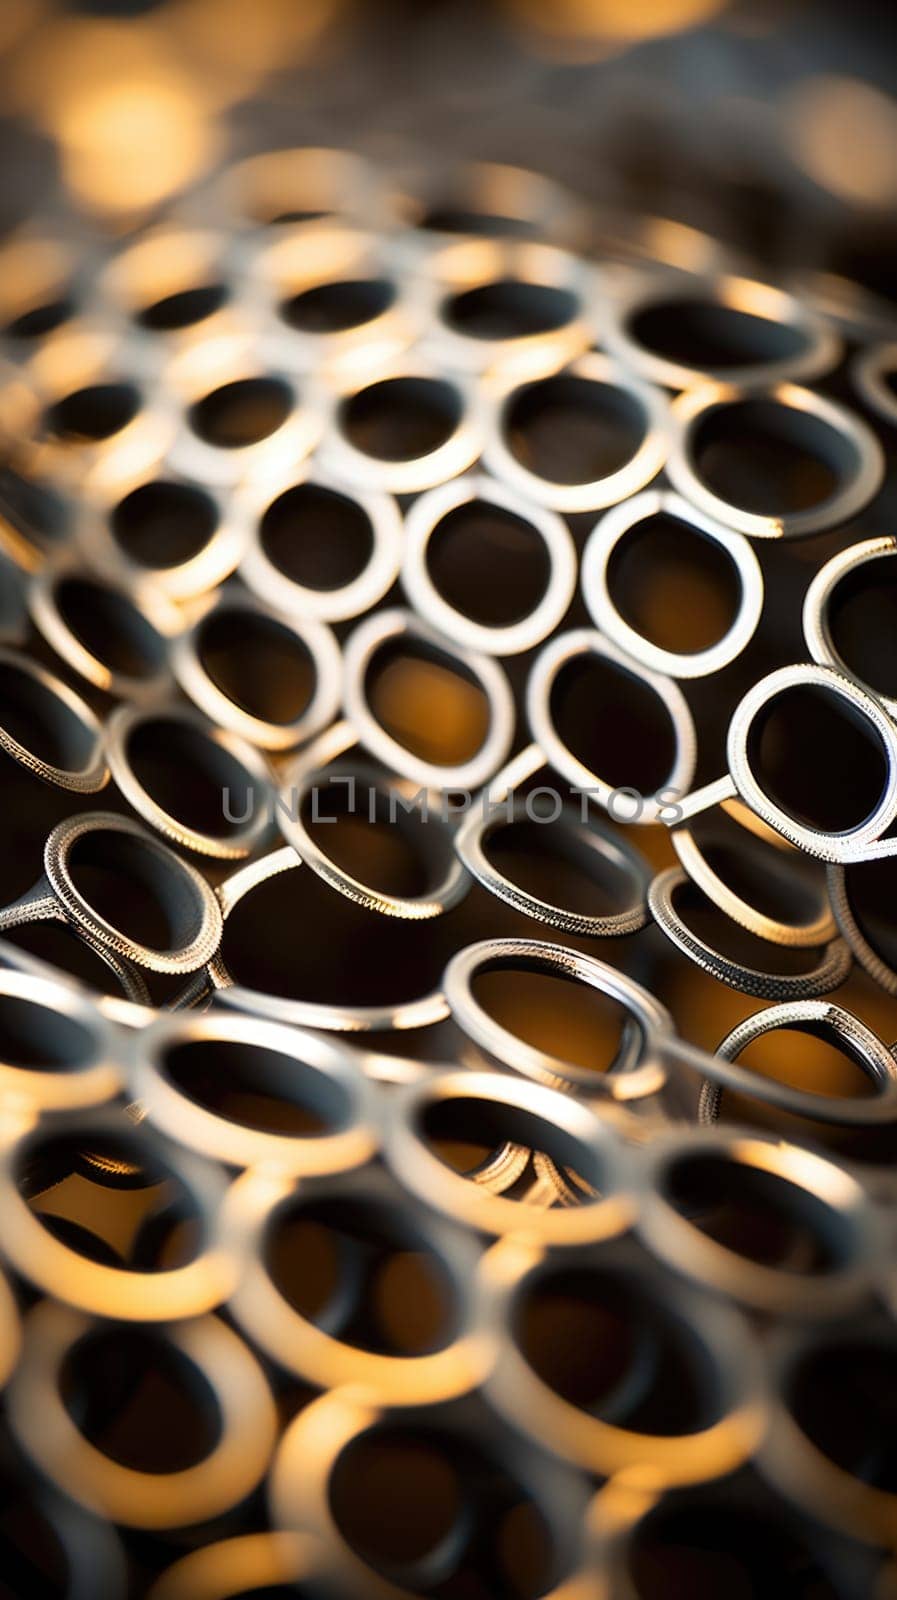 A close up of a metal mesh with circles